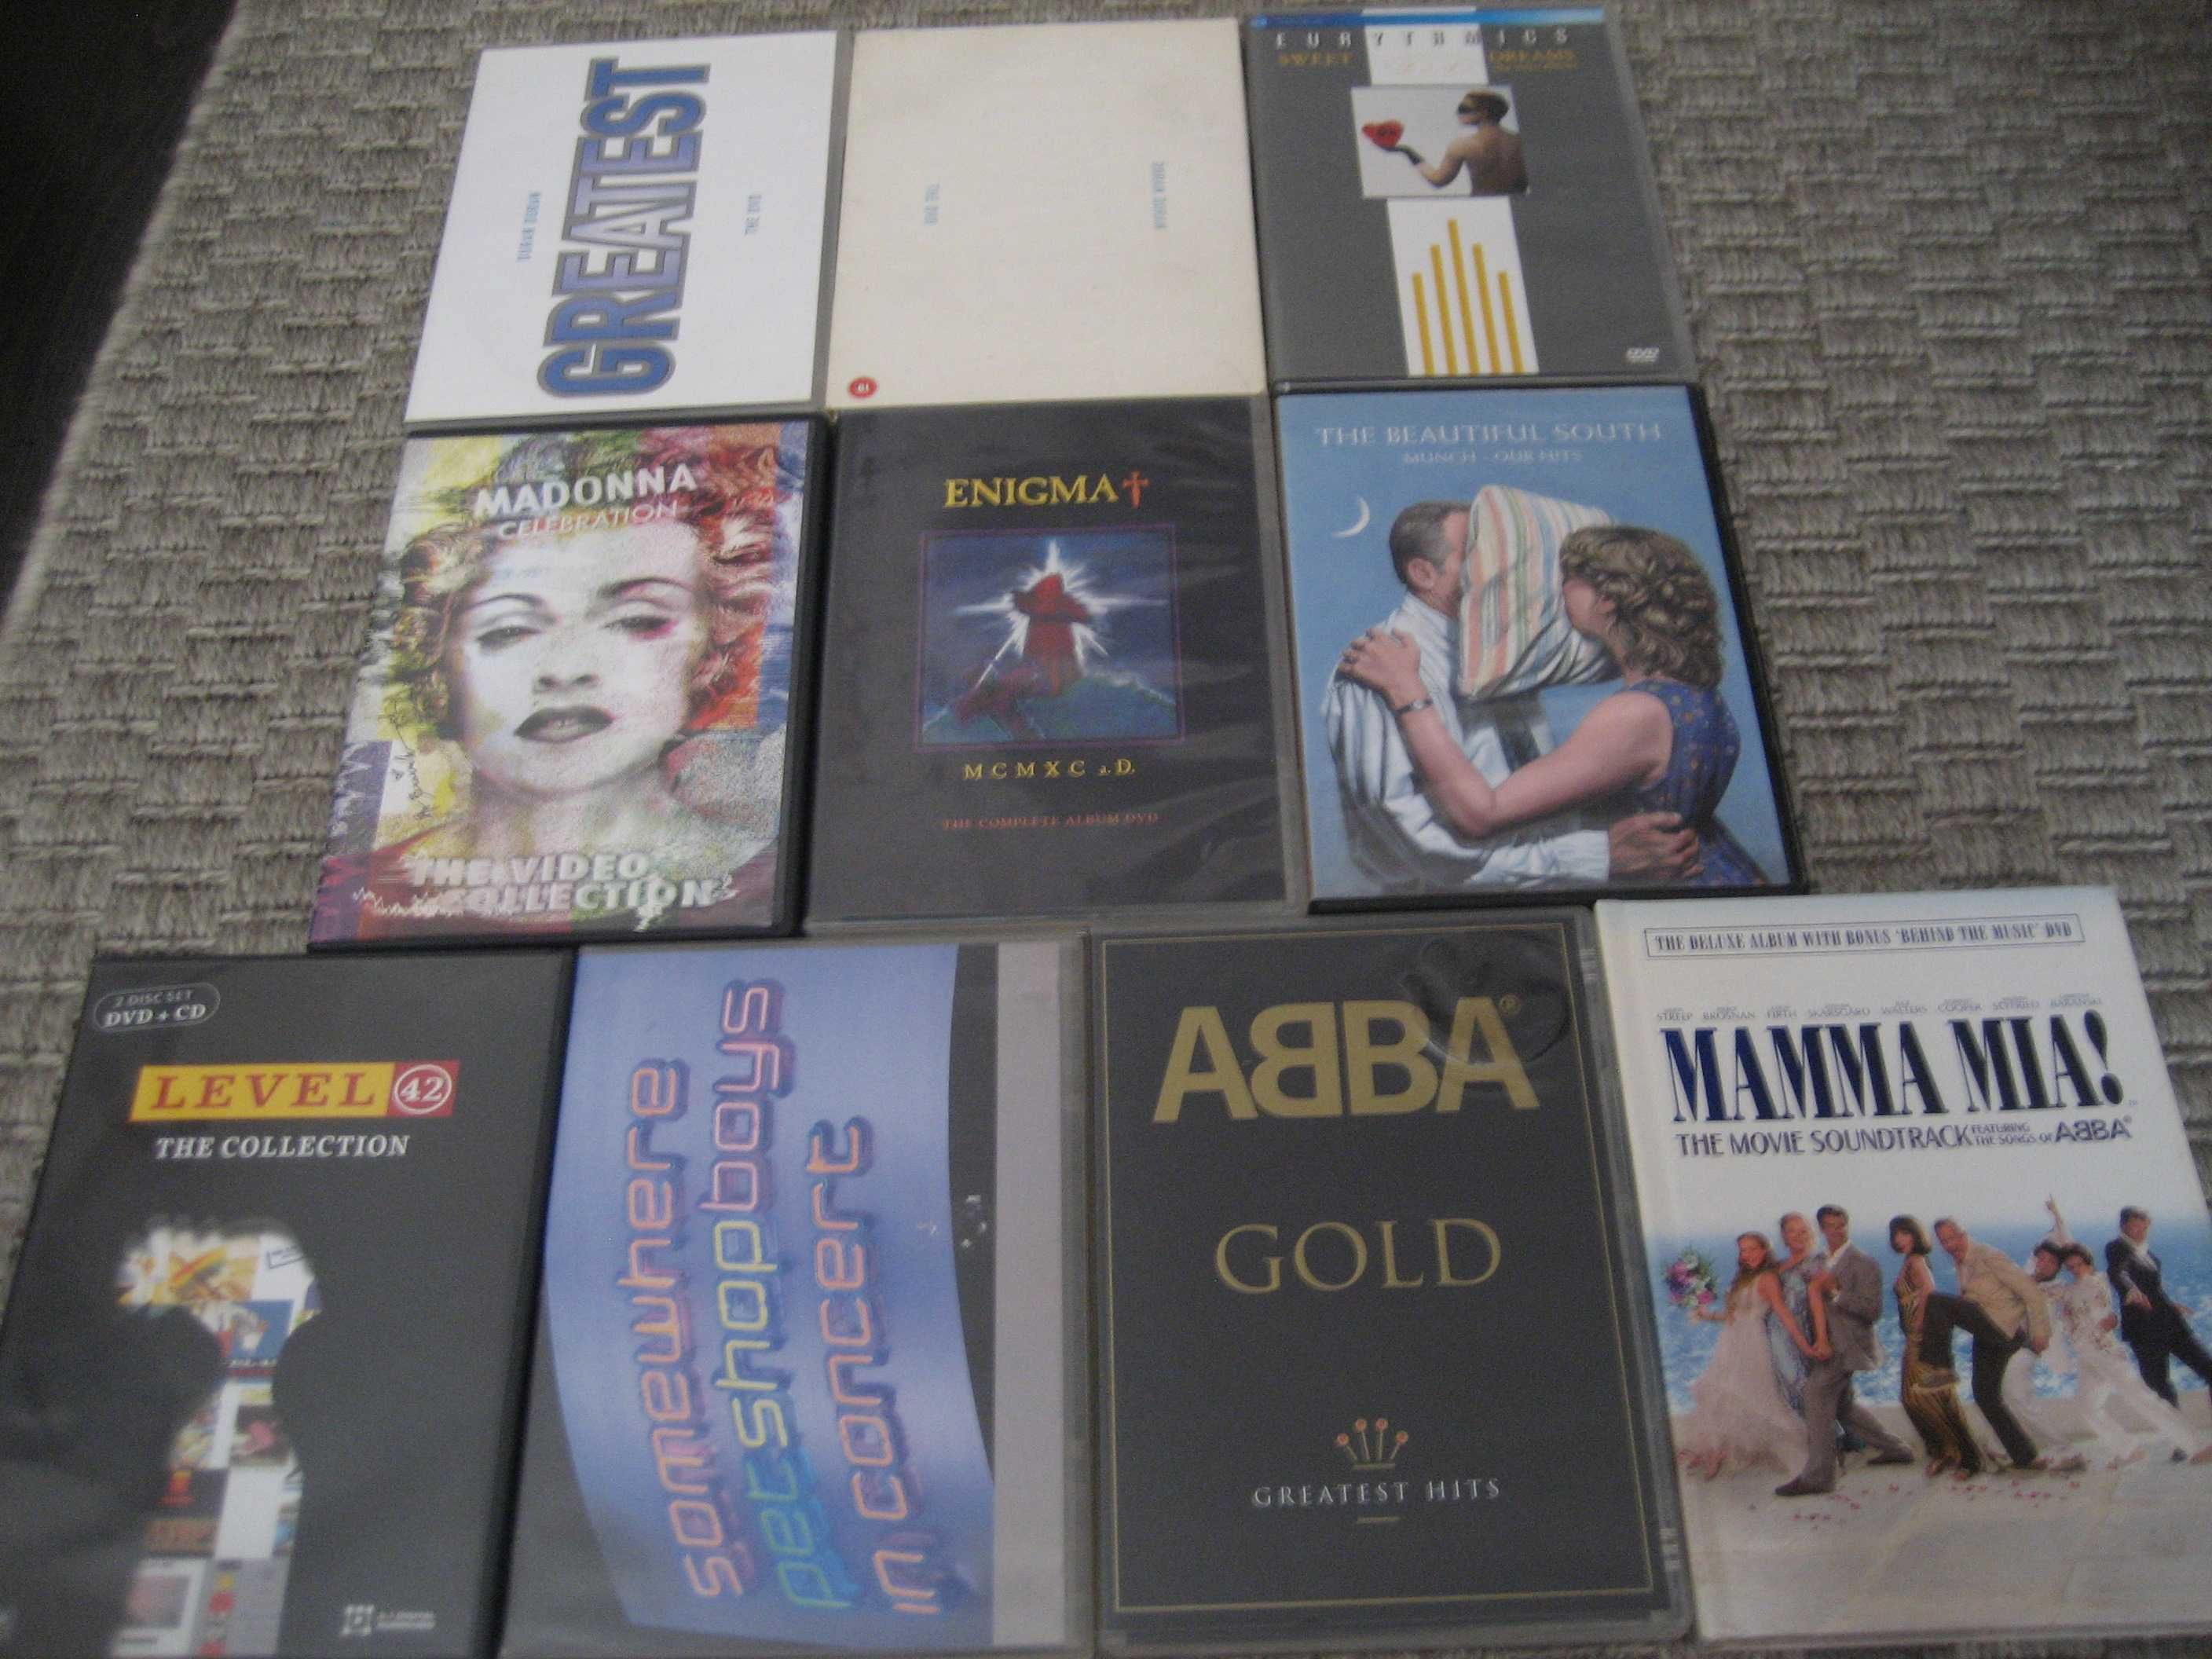 DVDs Musicais - concertos, videoclips, Pink Floyd, U2, Madonna, etc